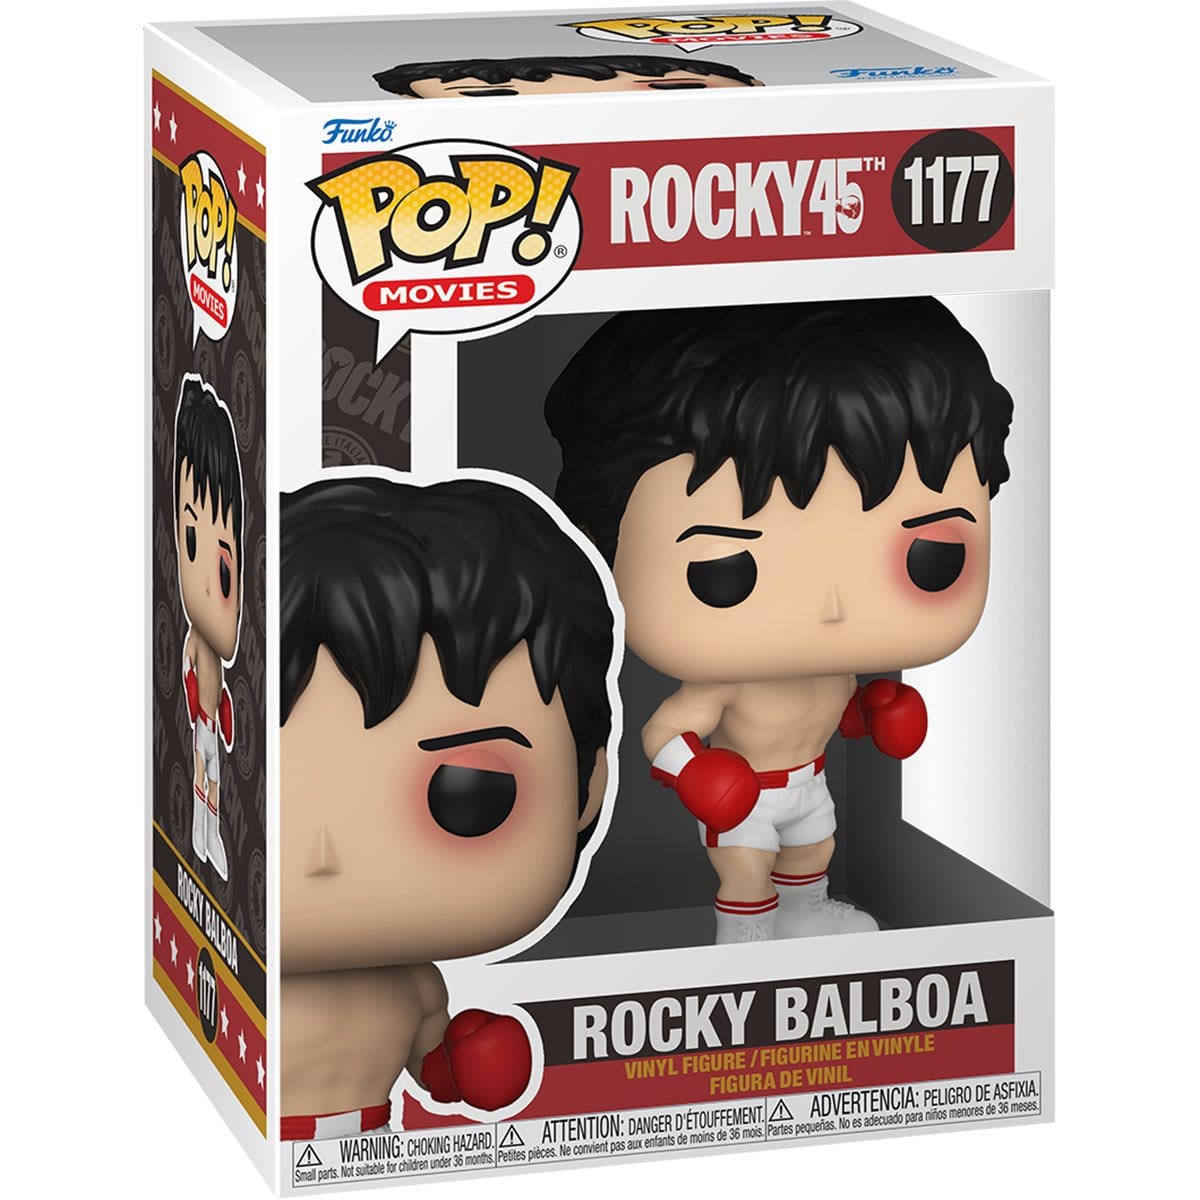 Rocky 45th Anniversary Rocky Balboa Pop! Vinyl Figure Collectible Toy 